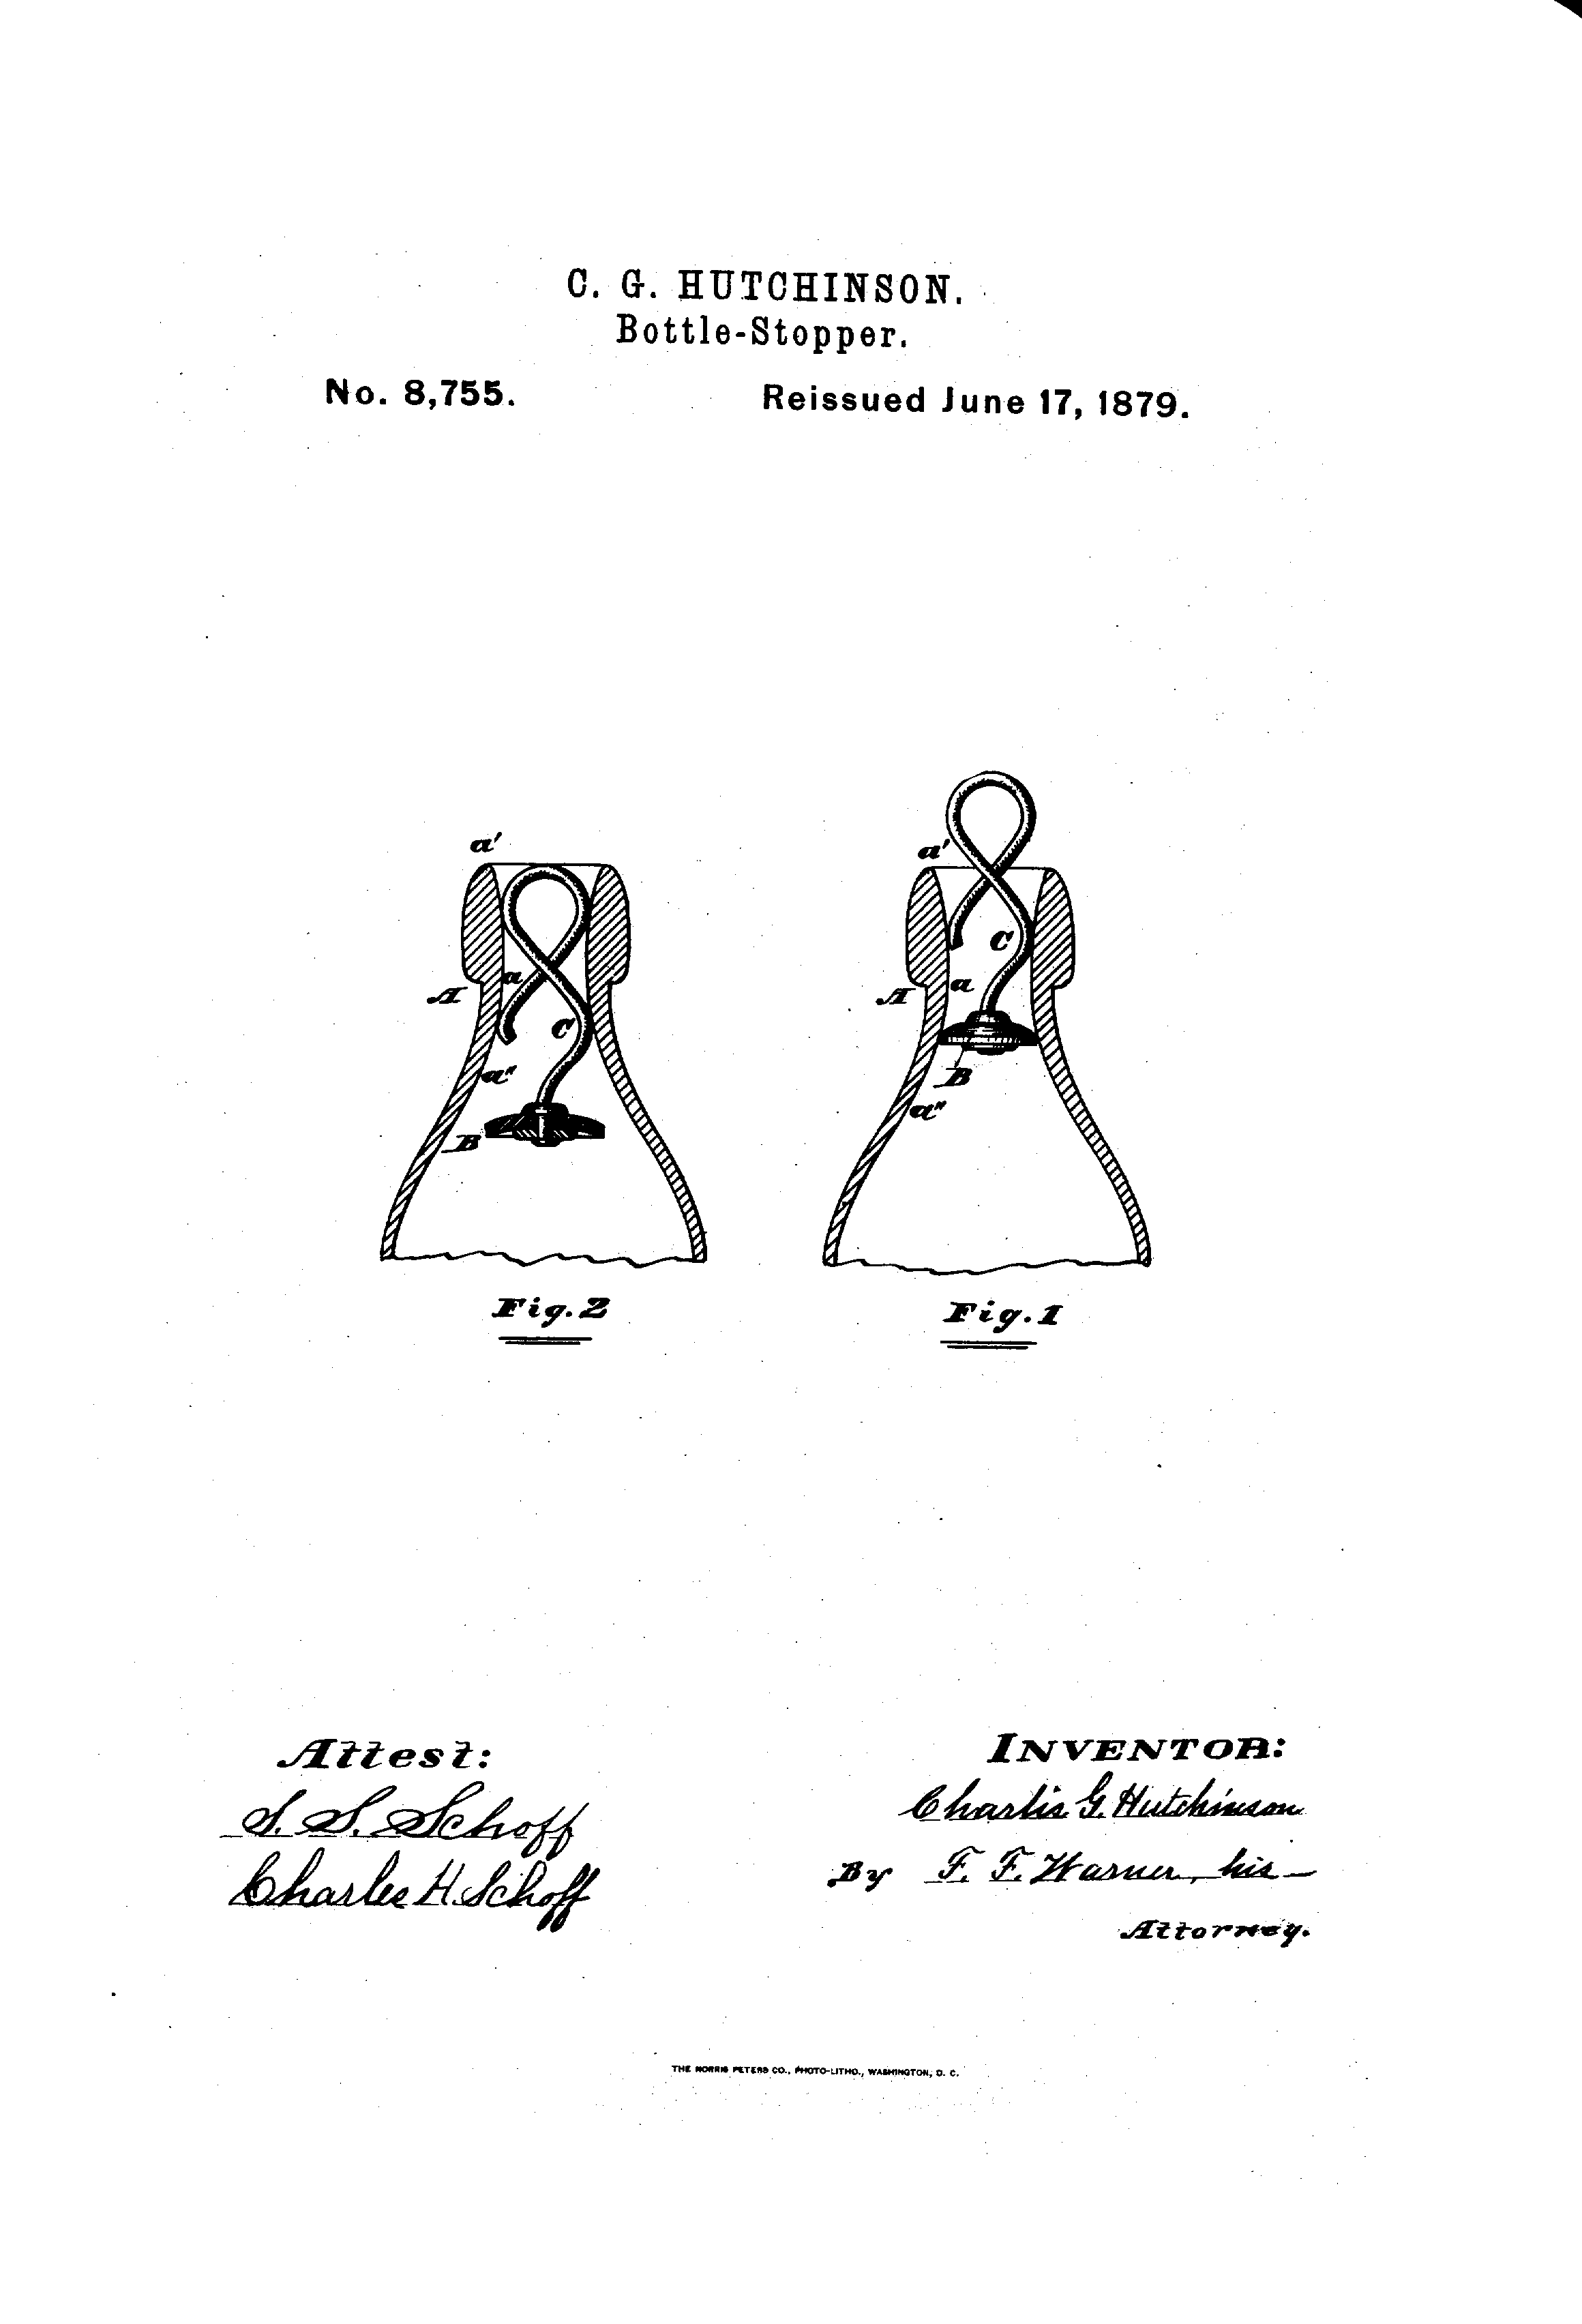 Reissued Patent 8,755